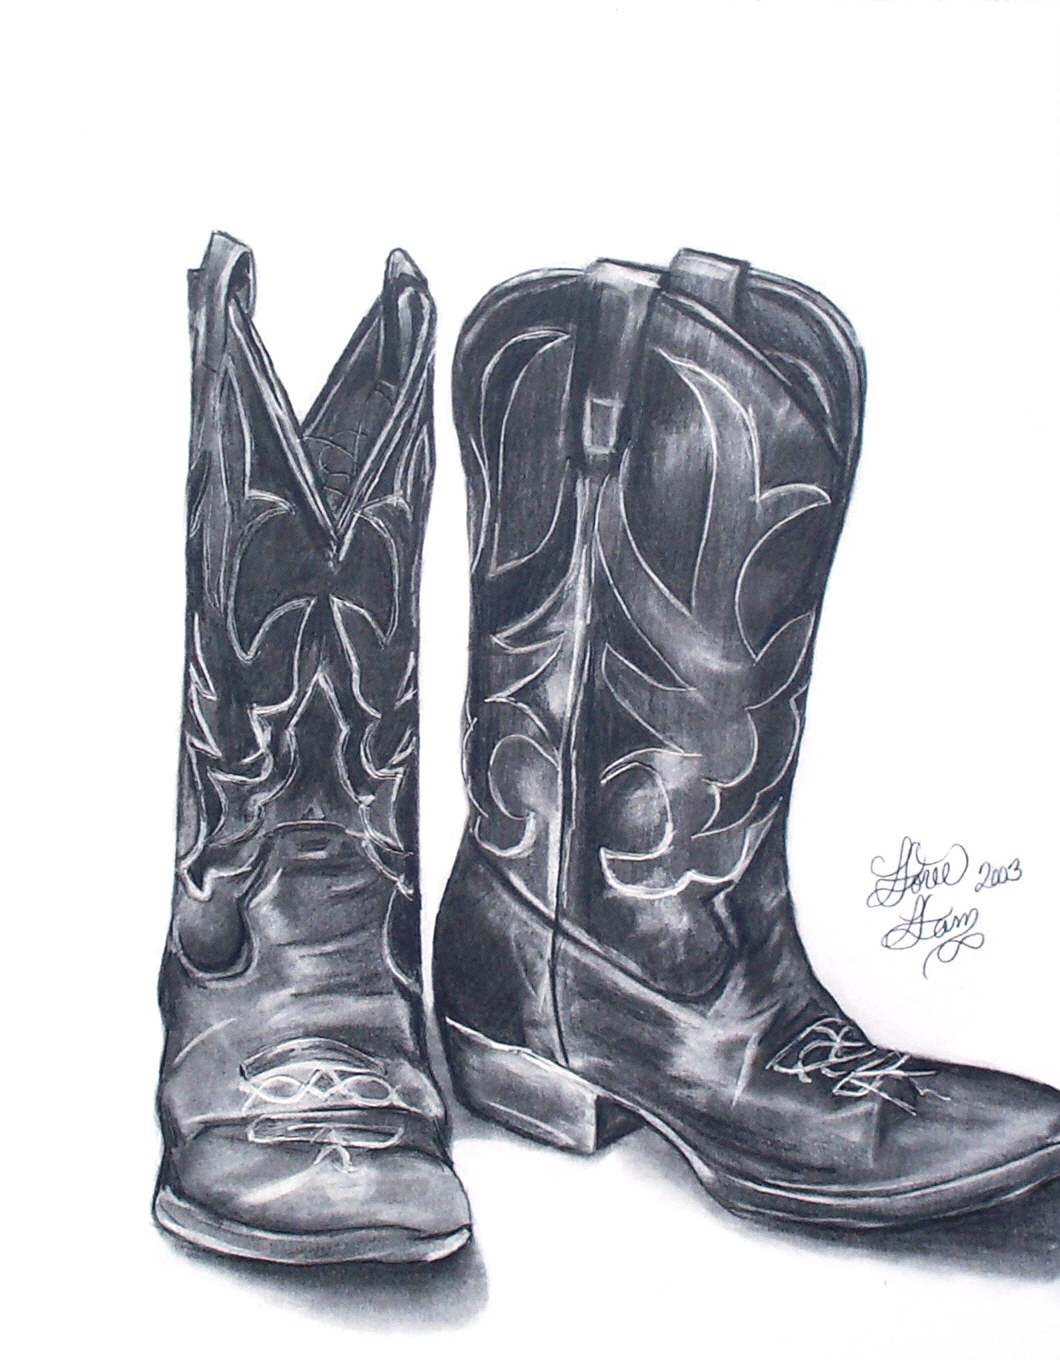 Cowboy Boot Sketch at Explore collection of Cowboy